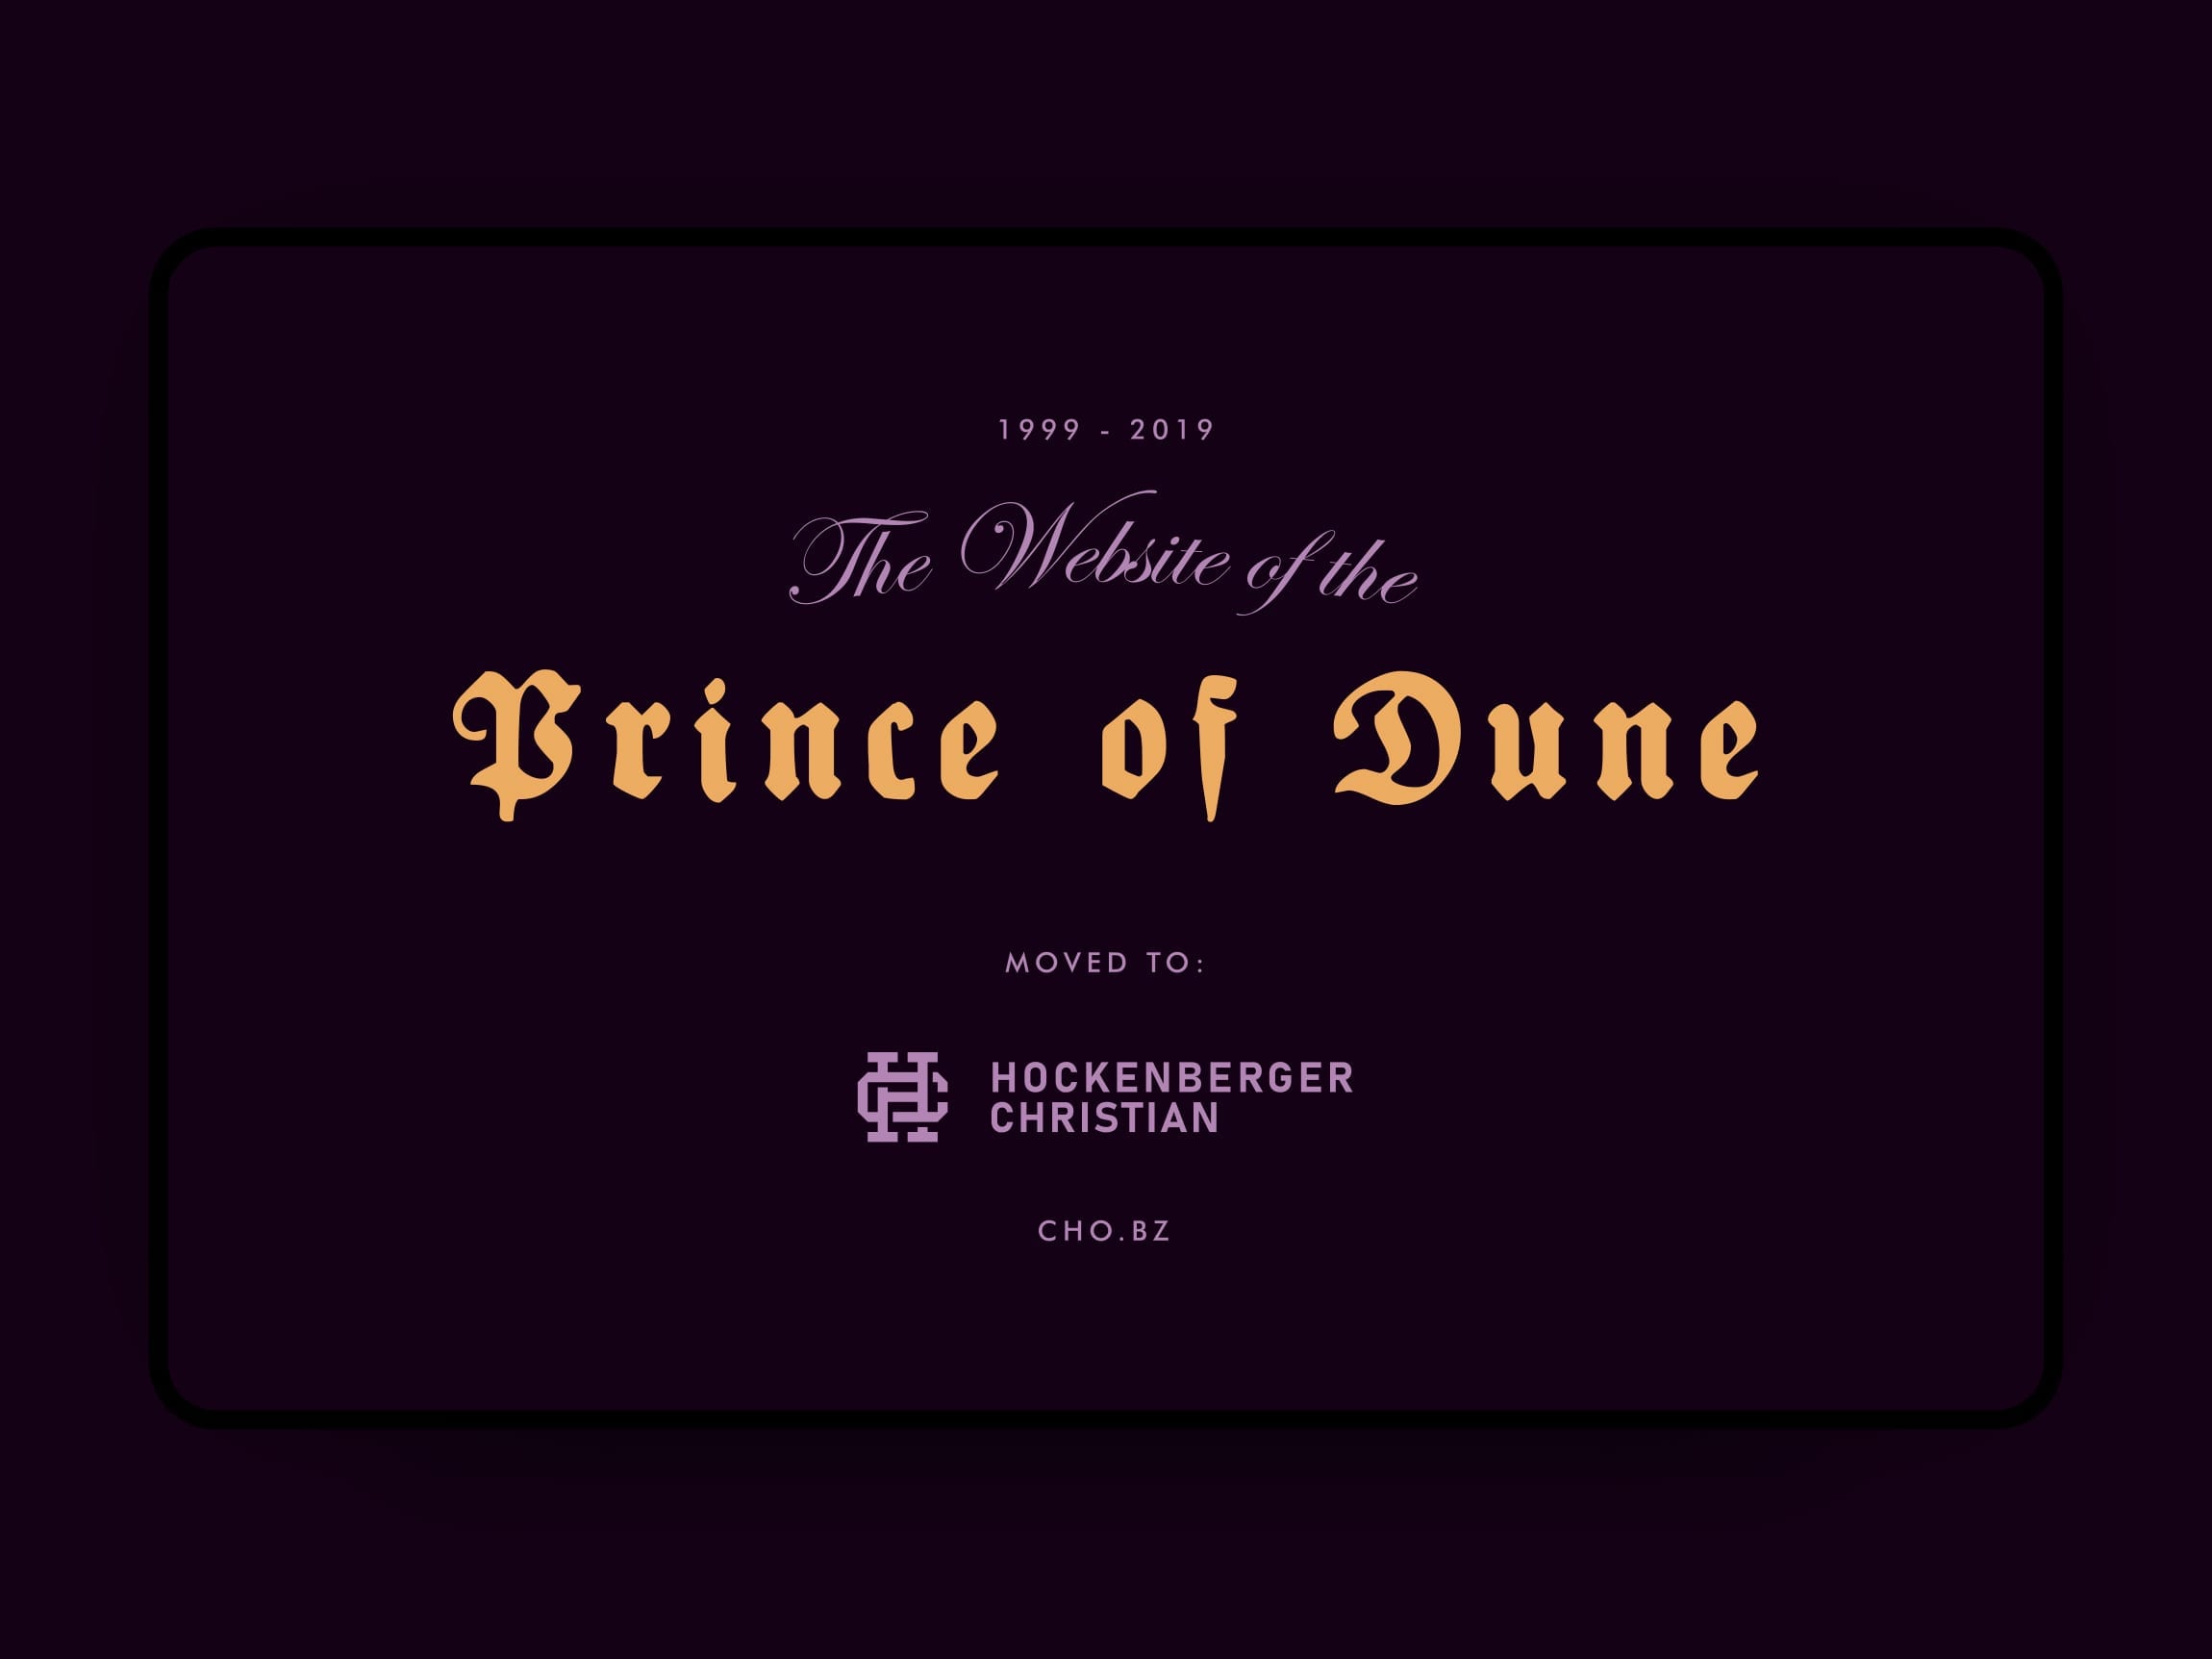 Princeofdune.com EOL, 2019